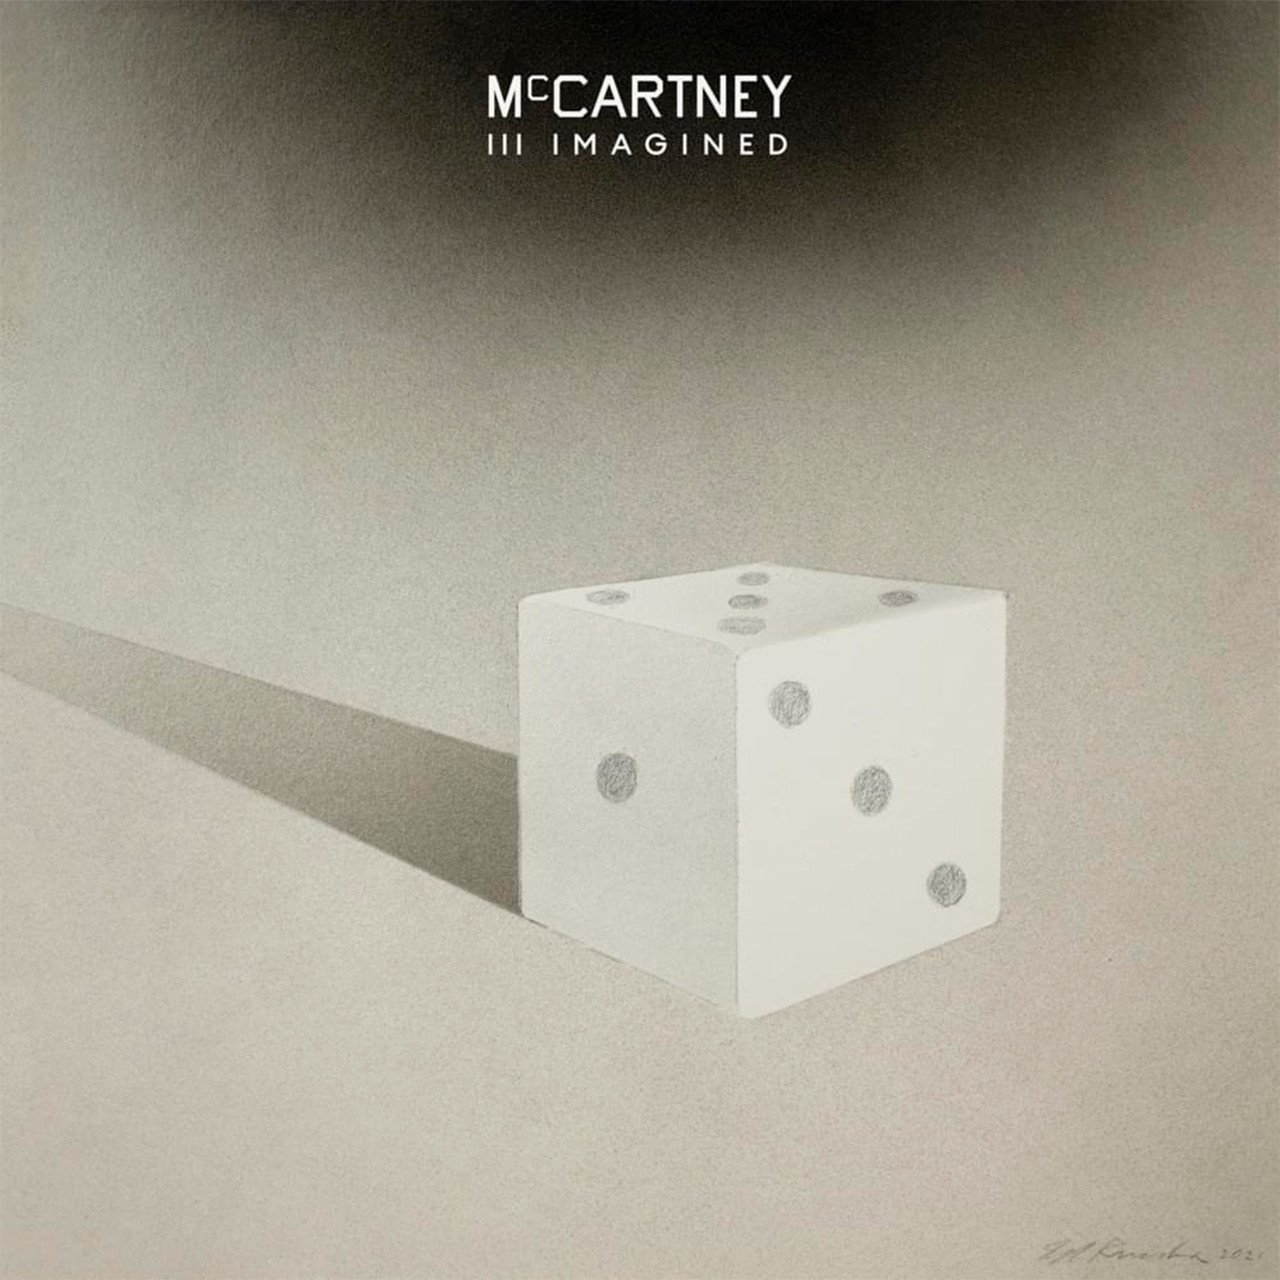 Рок Capitol US Paul McCartney - McCartney III Imagined рок ume usm mccartney paul paul is live